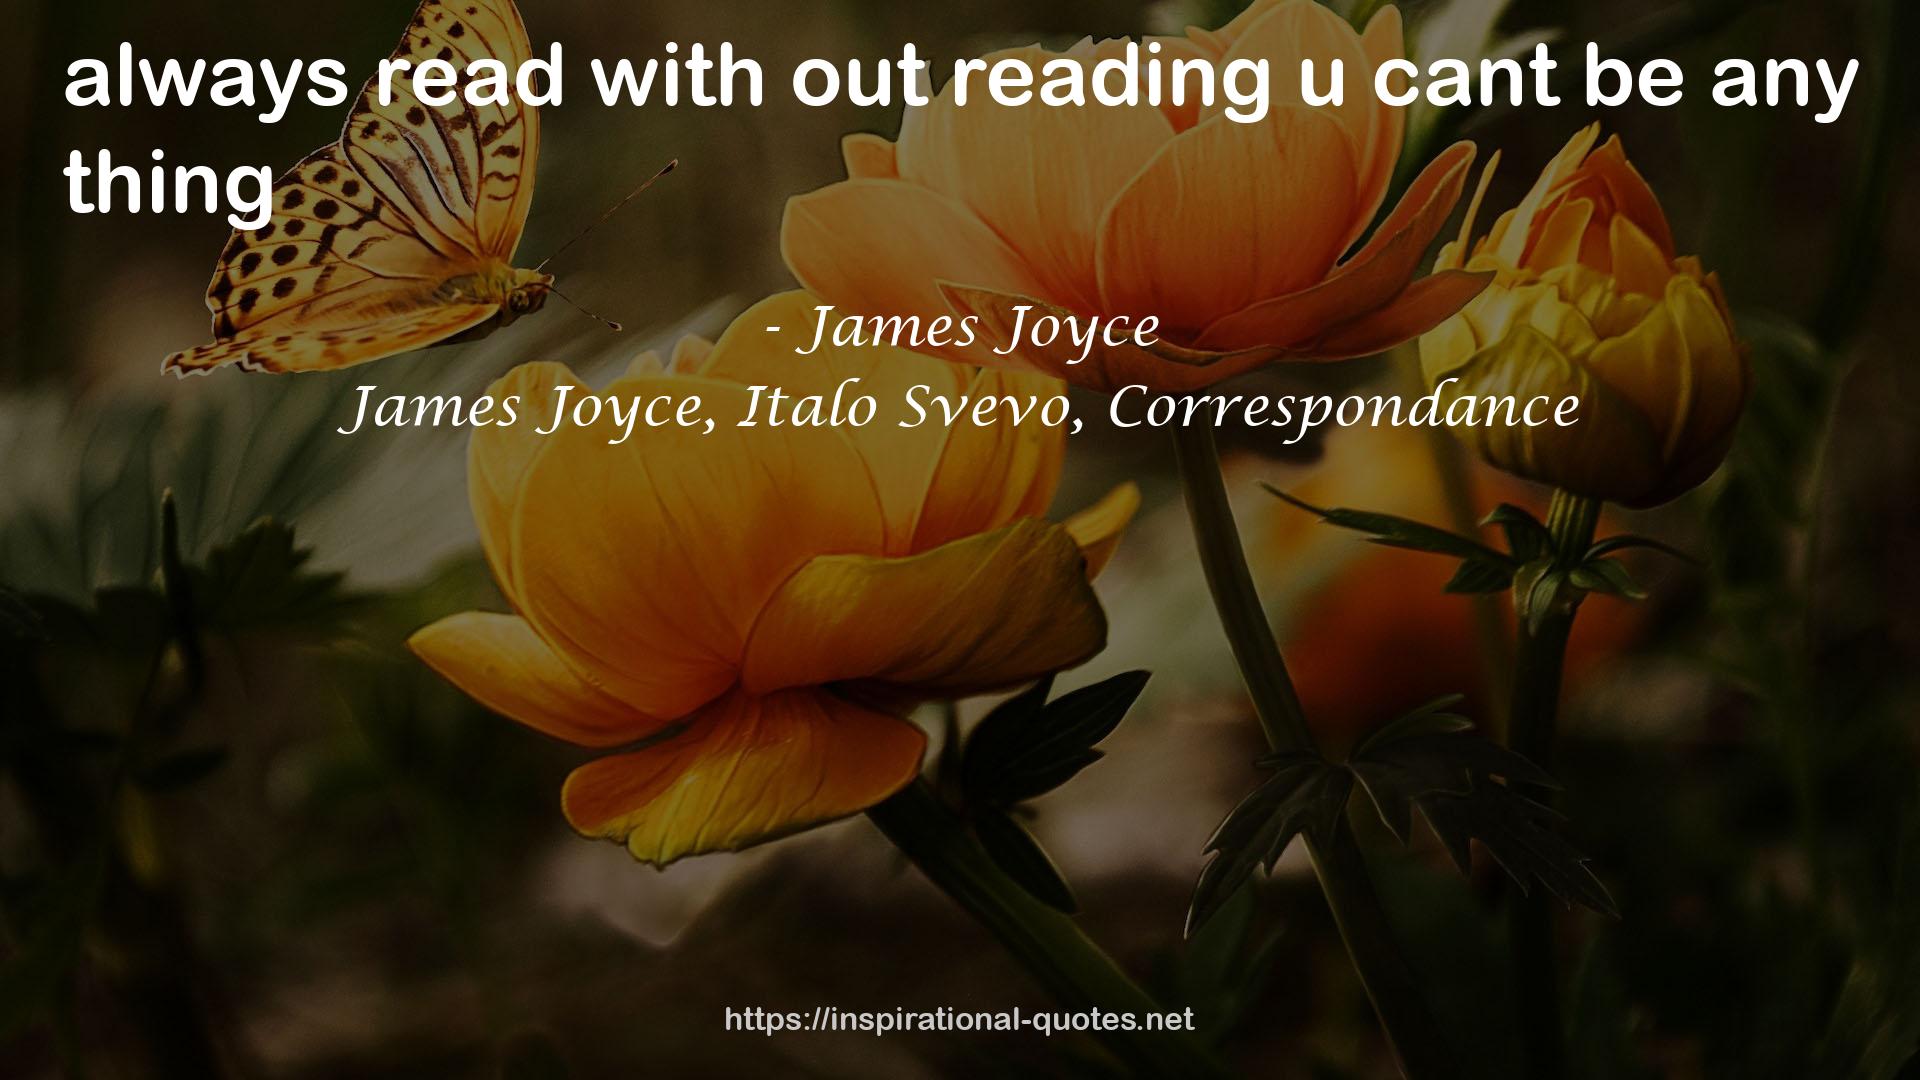 James Joyce, Italo Svevo, Correspondance QUOTES